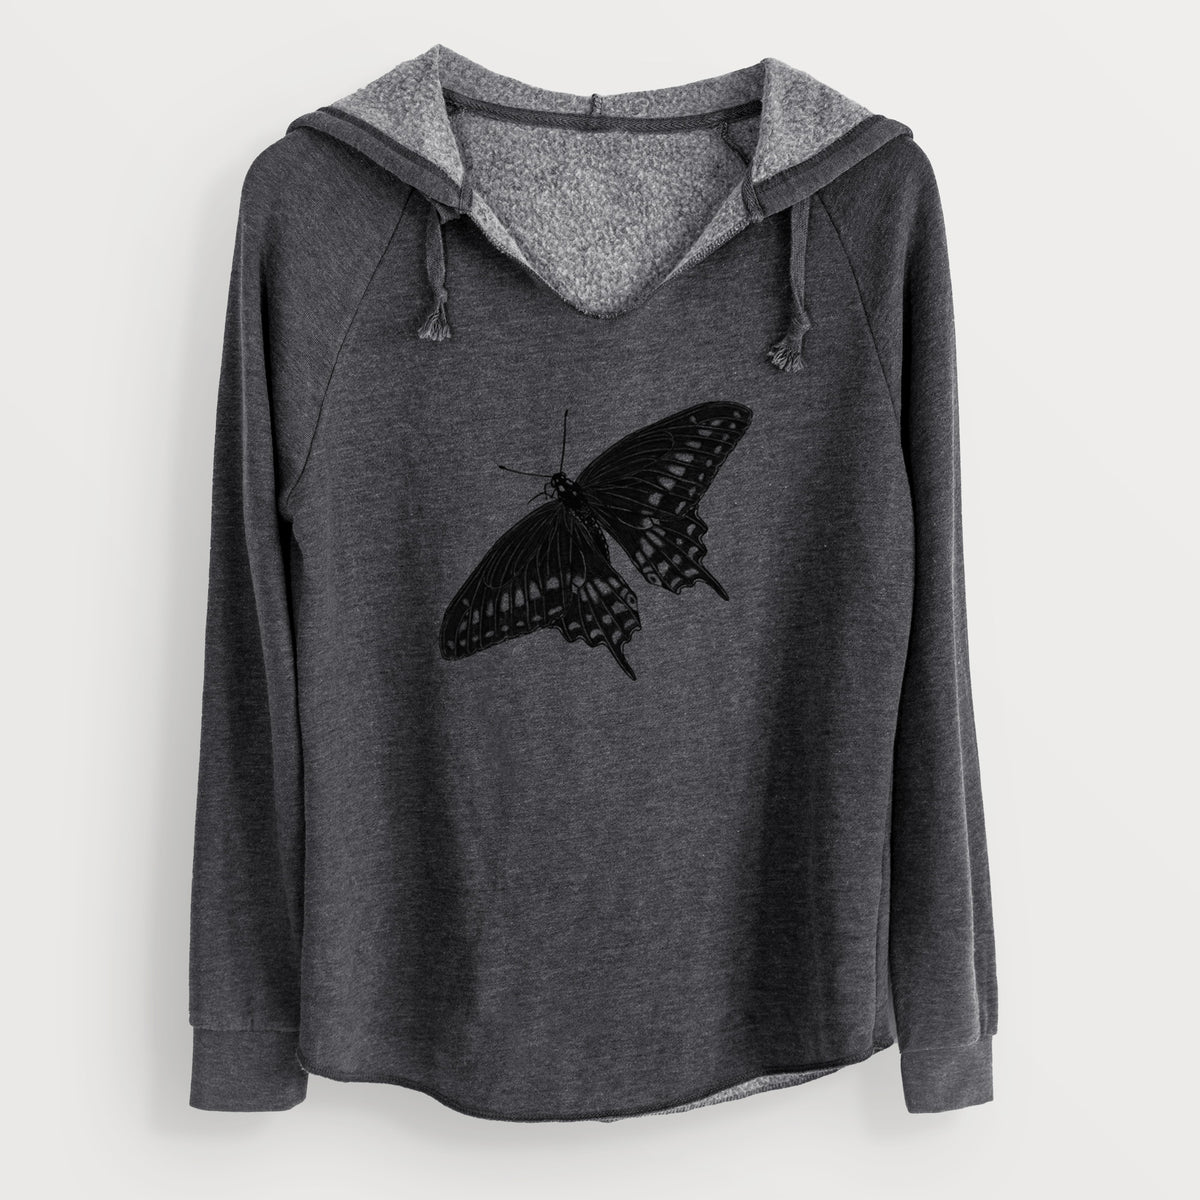 Black Swallowtail Butterfly - Papilio polyxenes - Cali Wave Hooded Sweatshirt